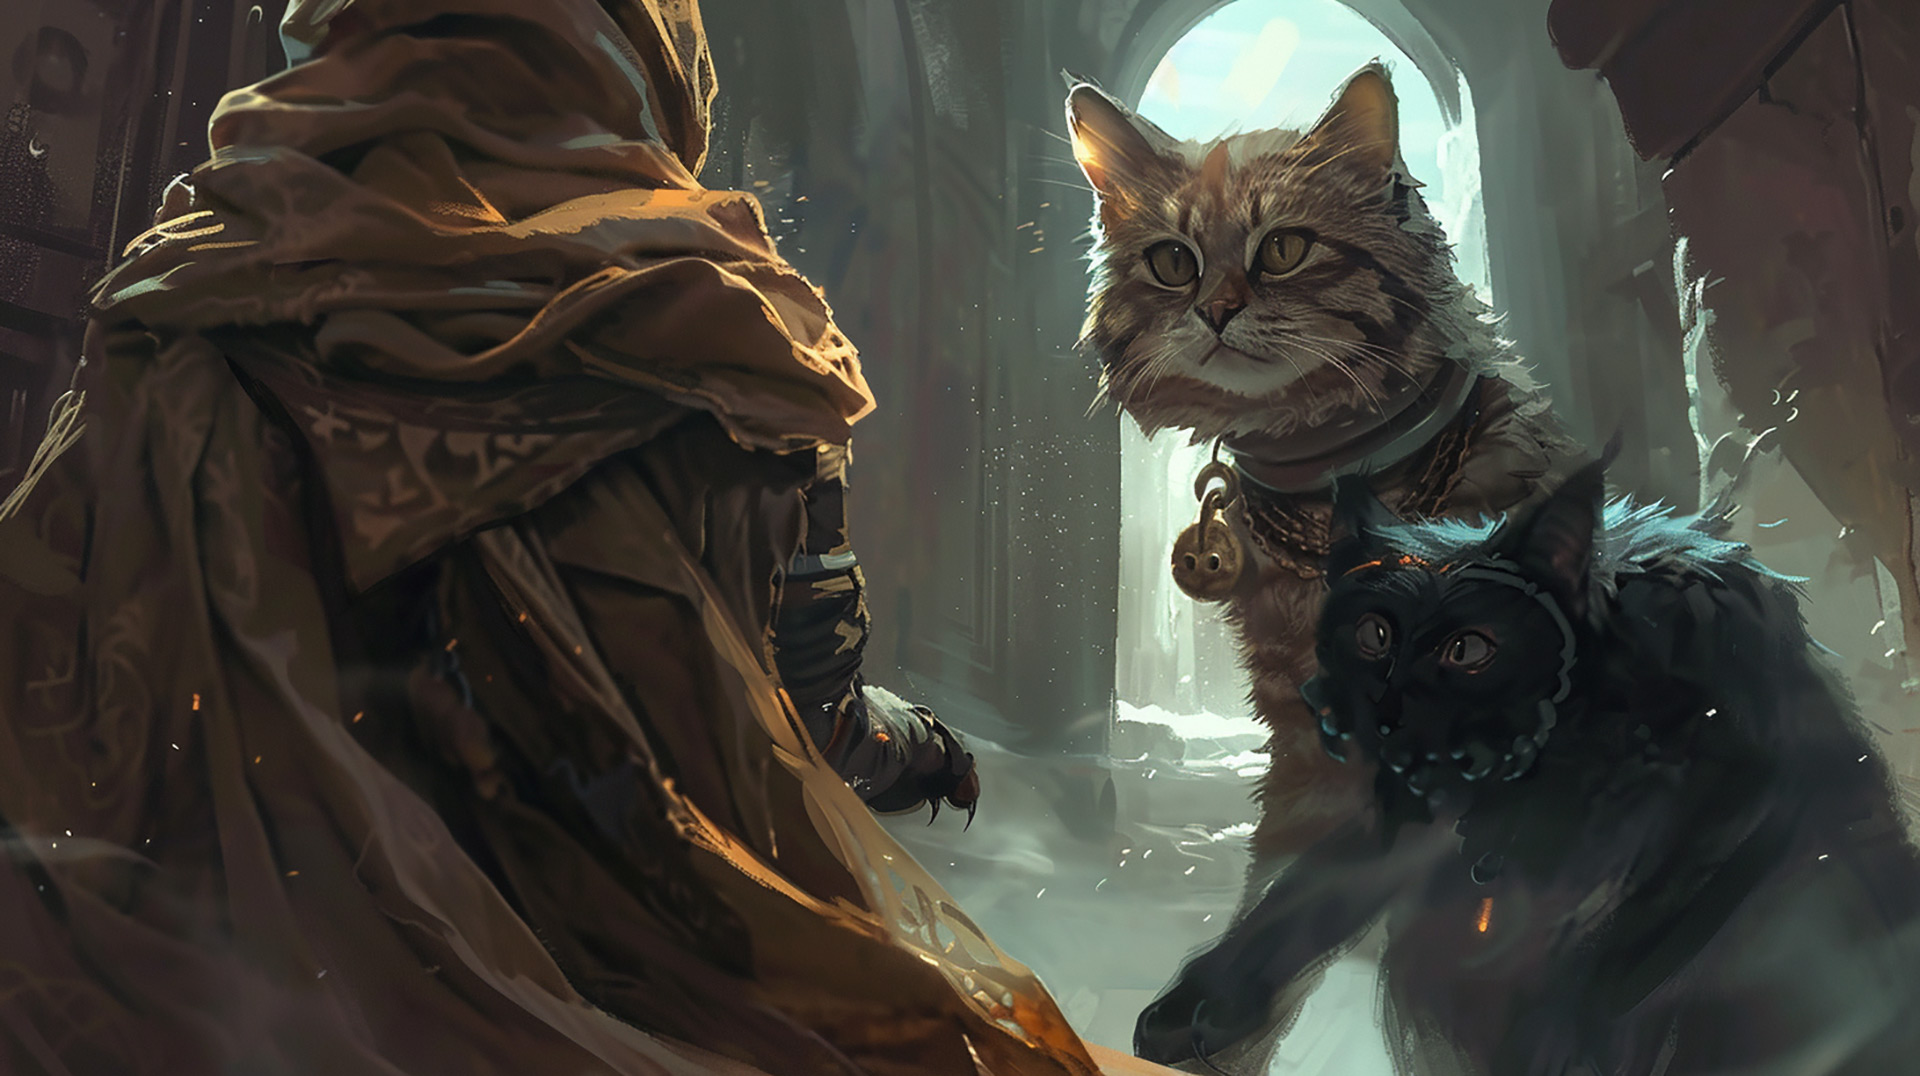 Humanoid Cat Rogue Faces Black Beholder: 4K Fantasy Art